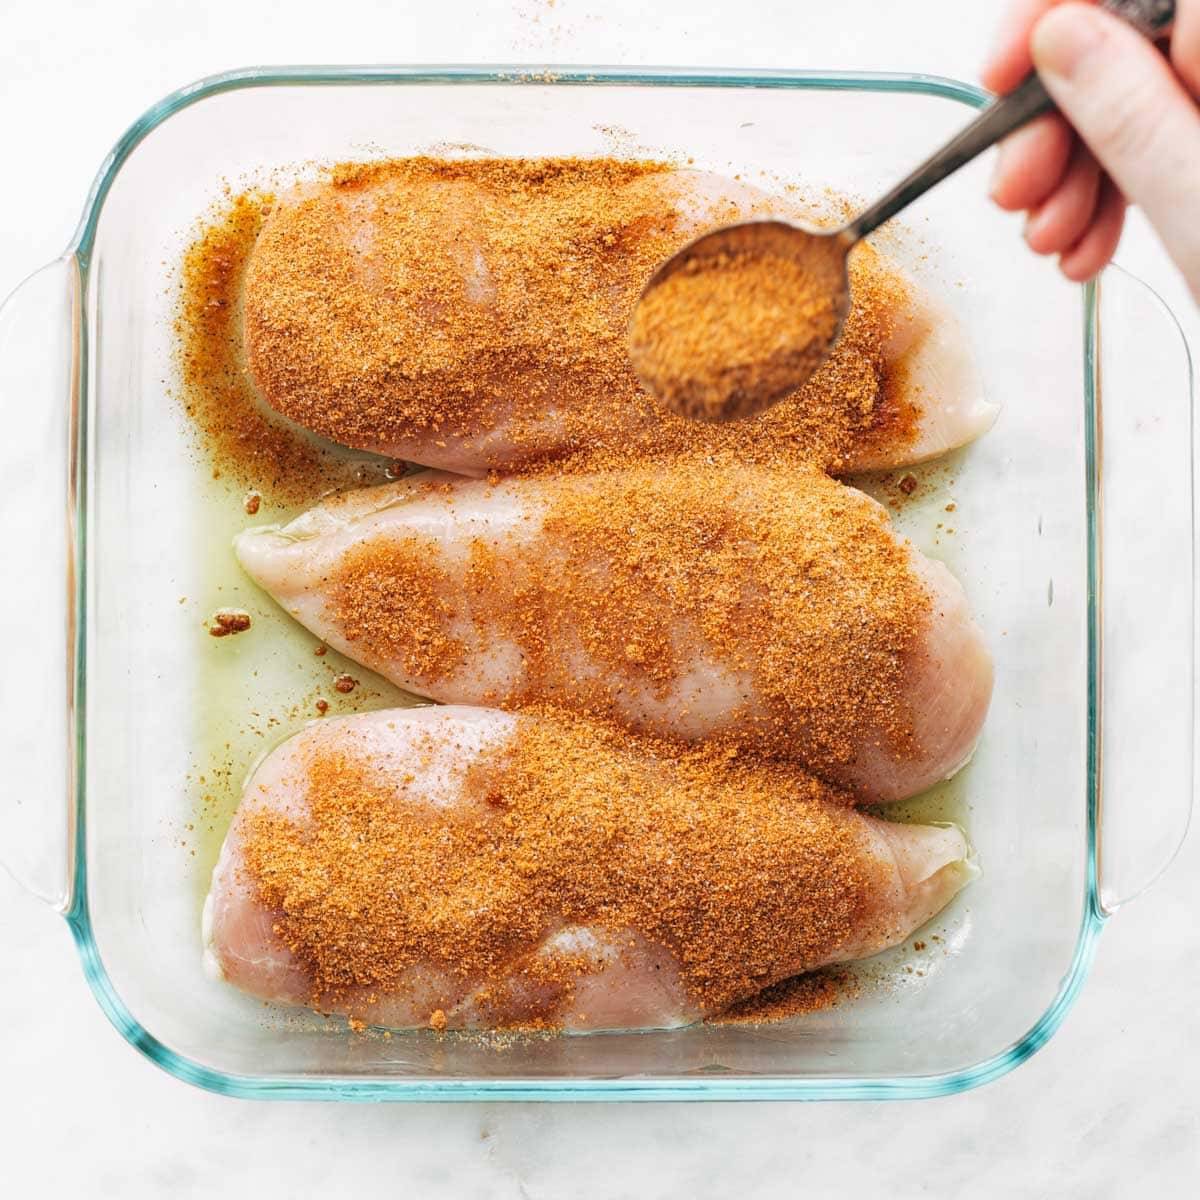 Adding seasoning to chicken breasts.